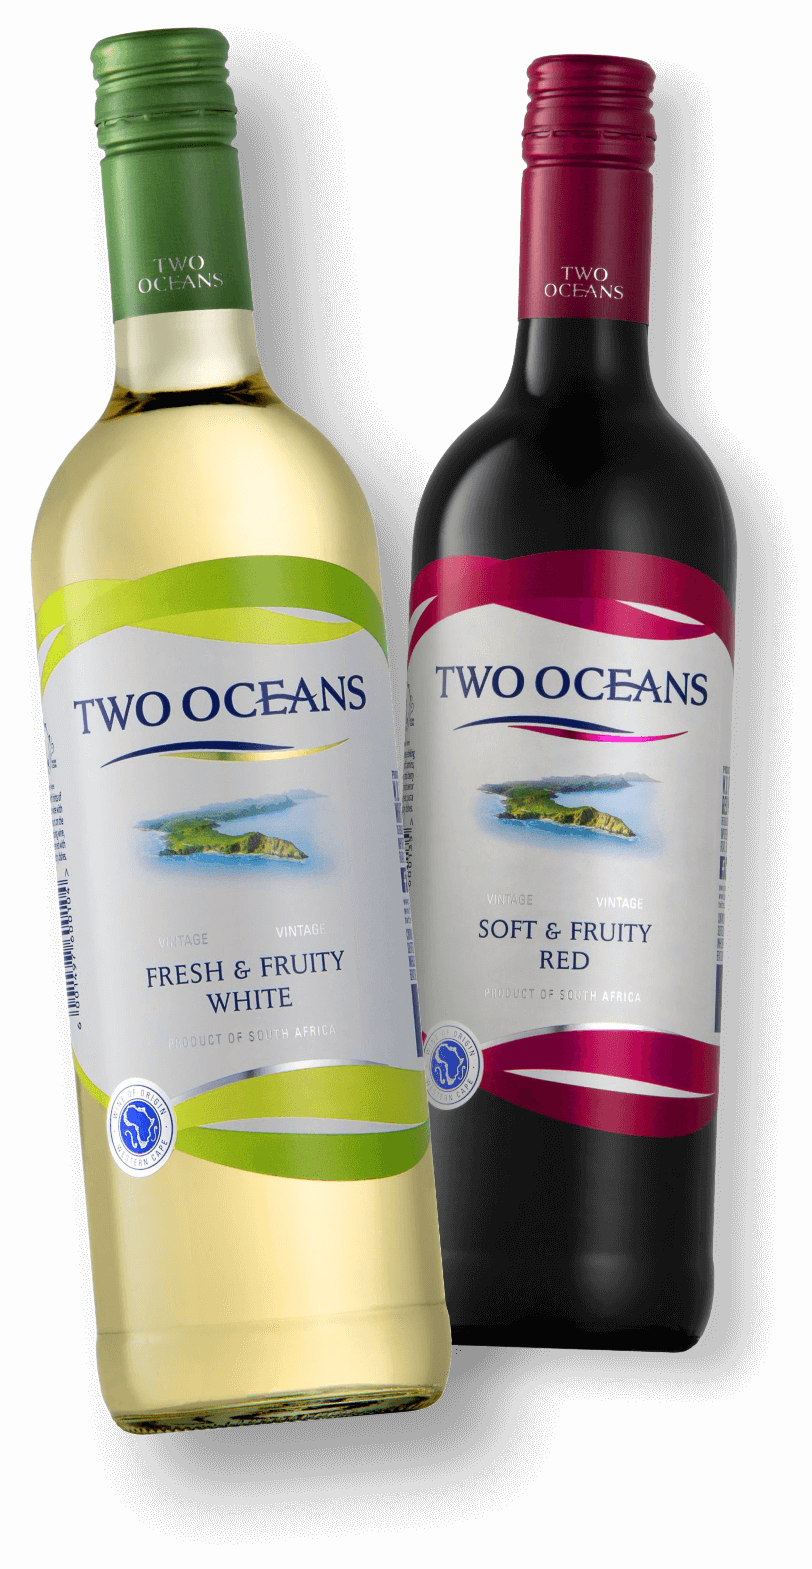 Two Oceans fruity range